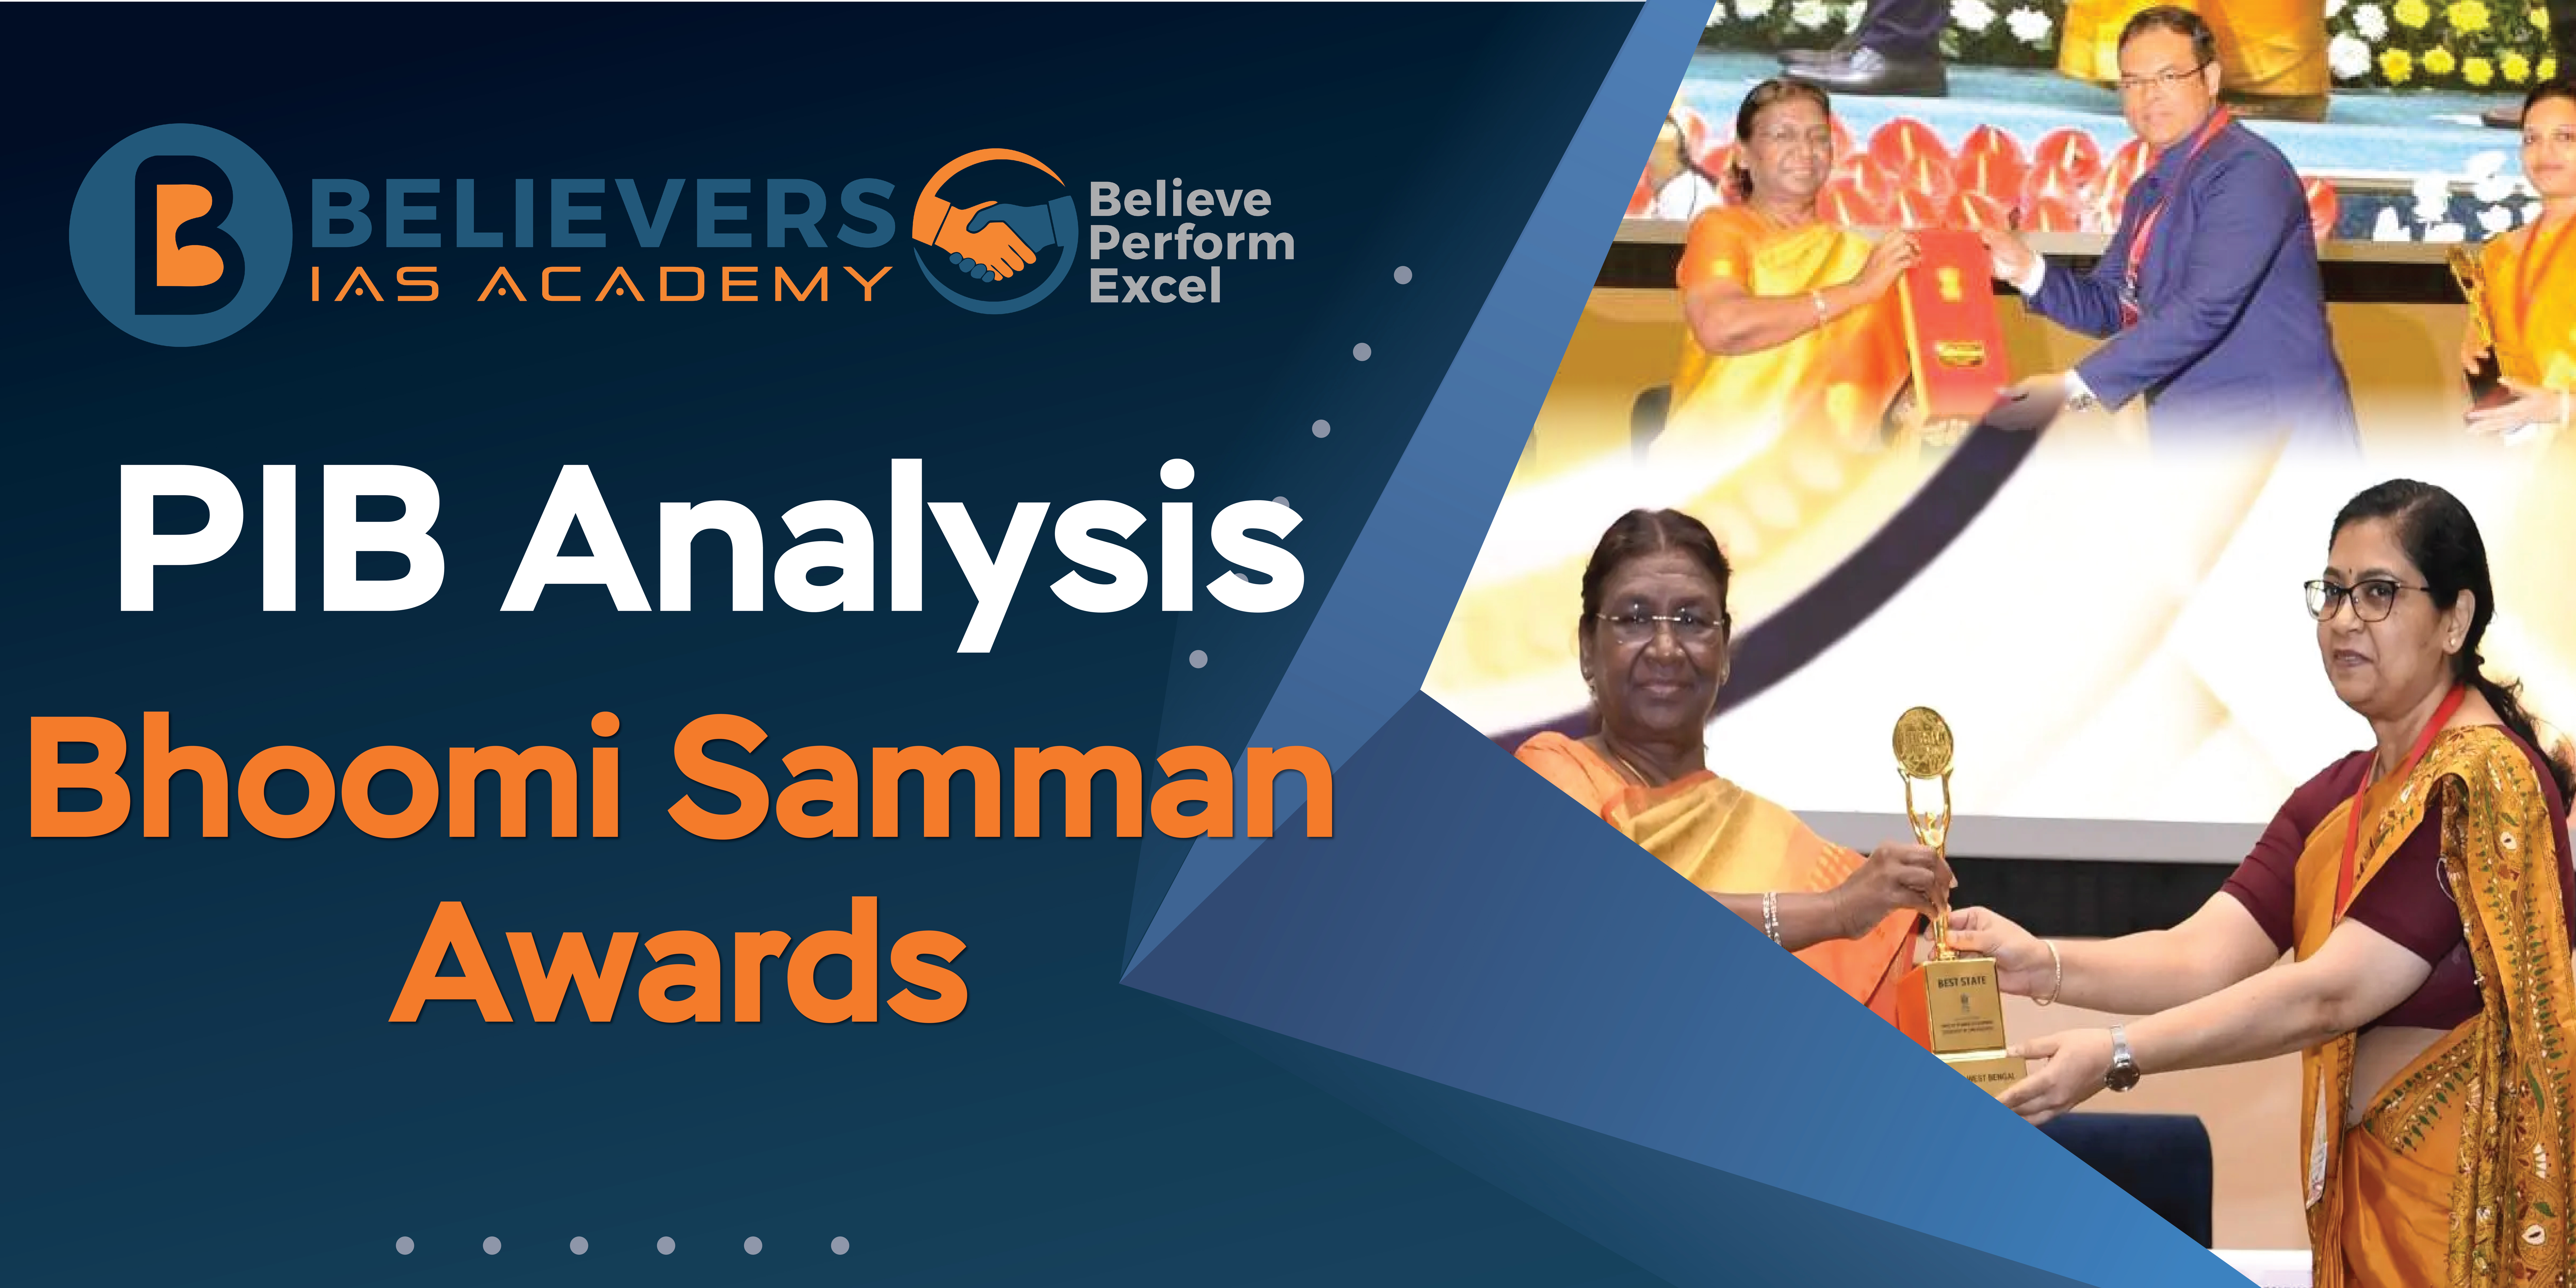 Bhoomi Samman Awards: In-depth Overview